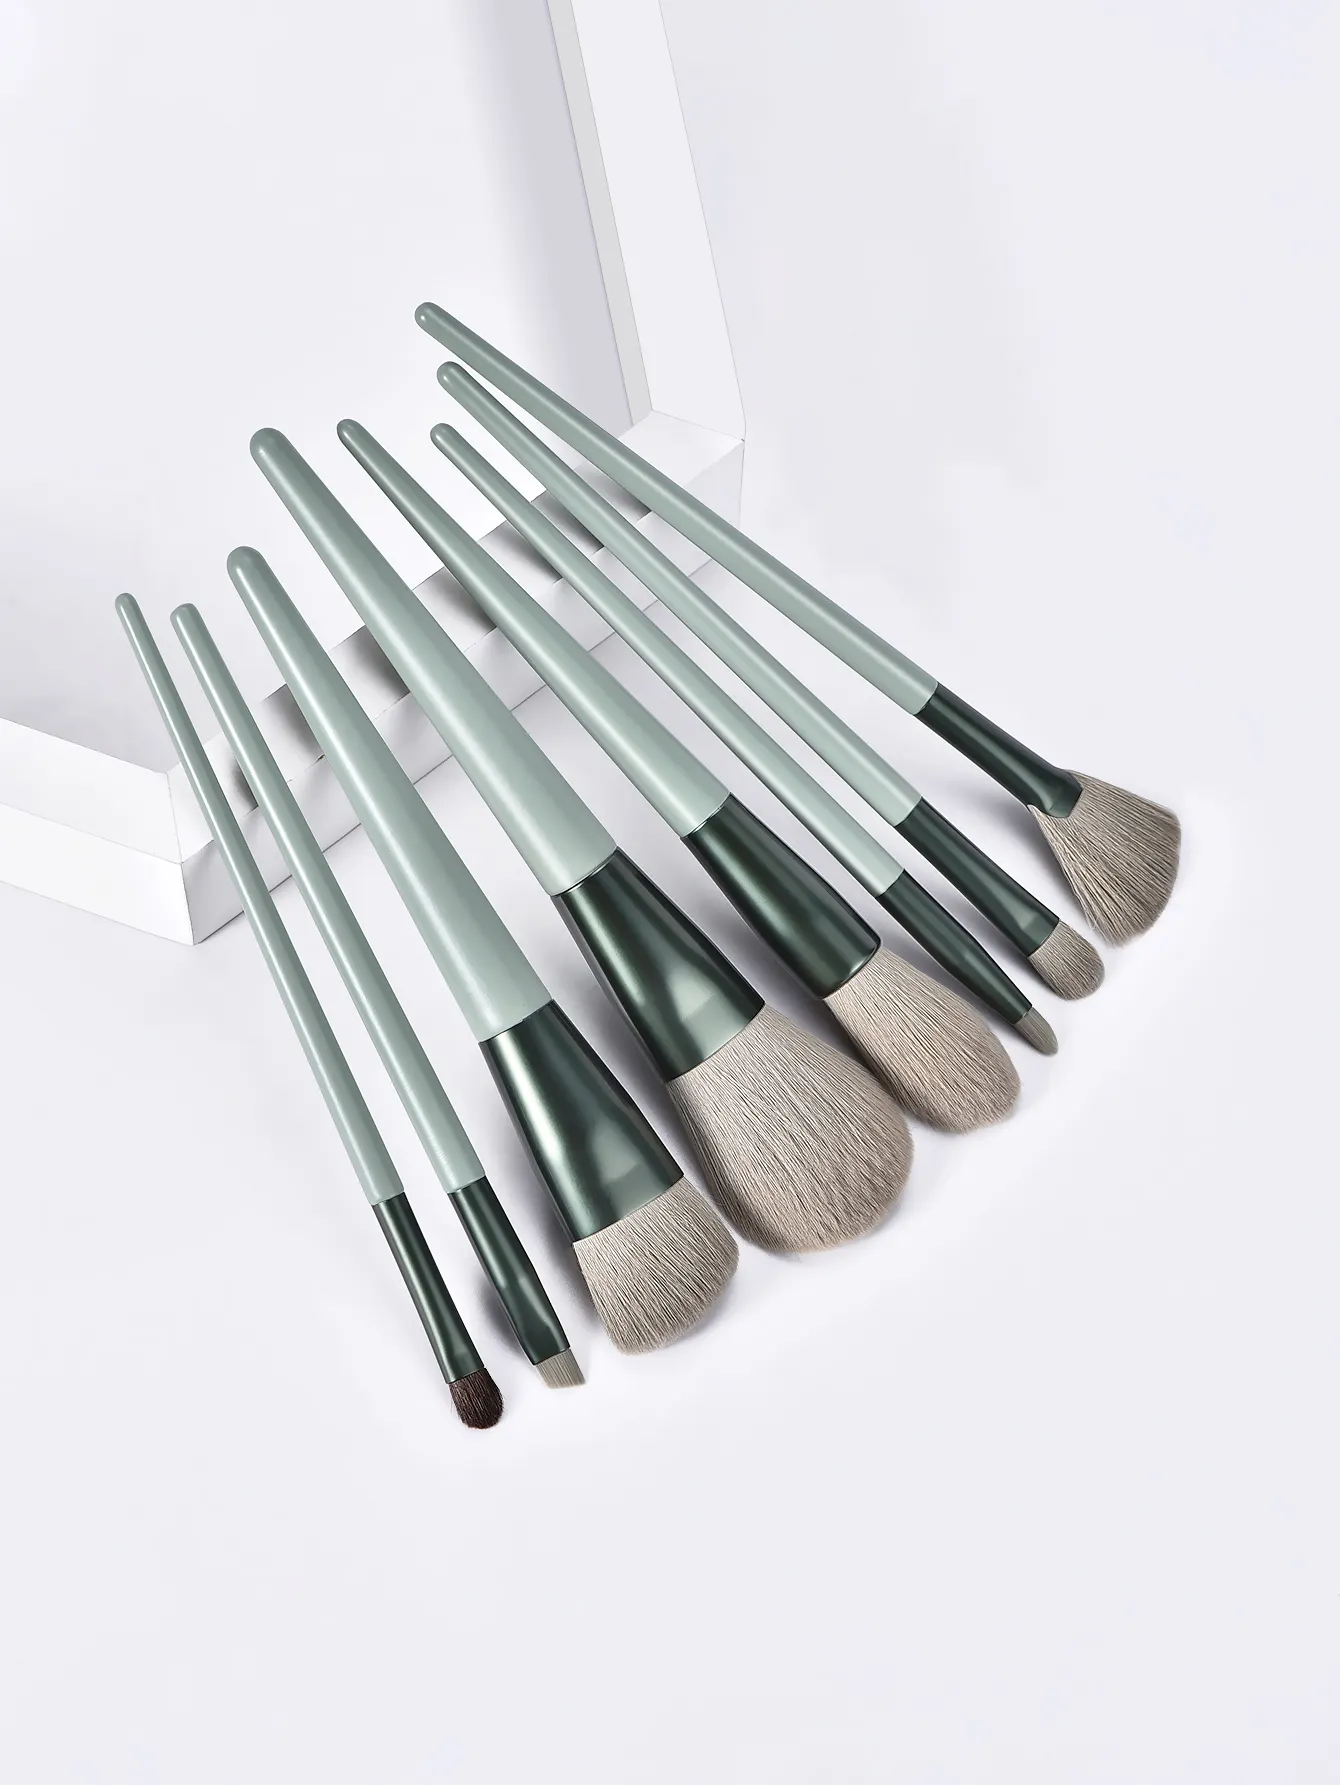 wholesale makeup brushes set 8pcs wooden handle soft hair flat makeup brush custom